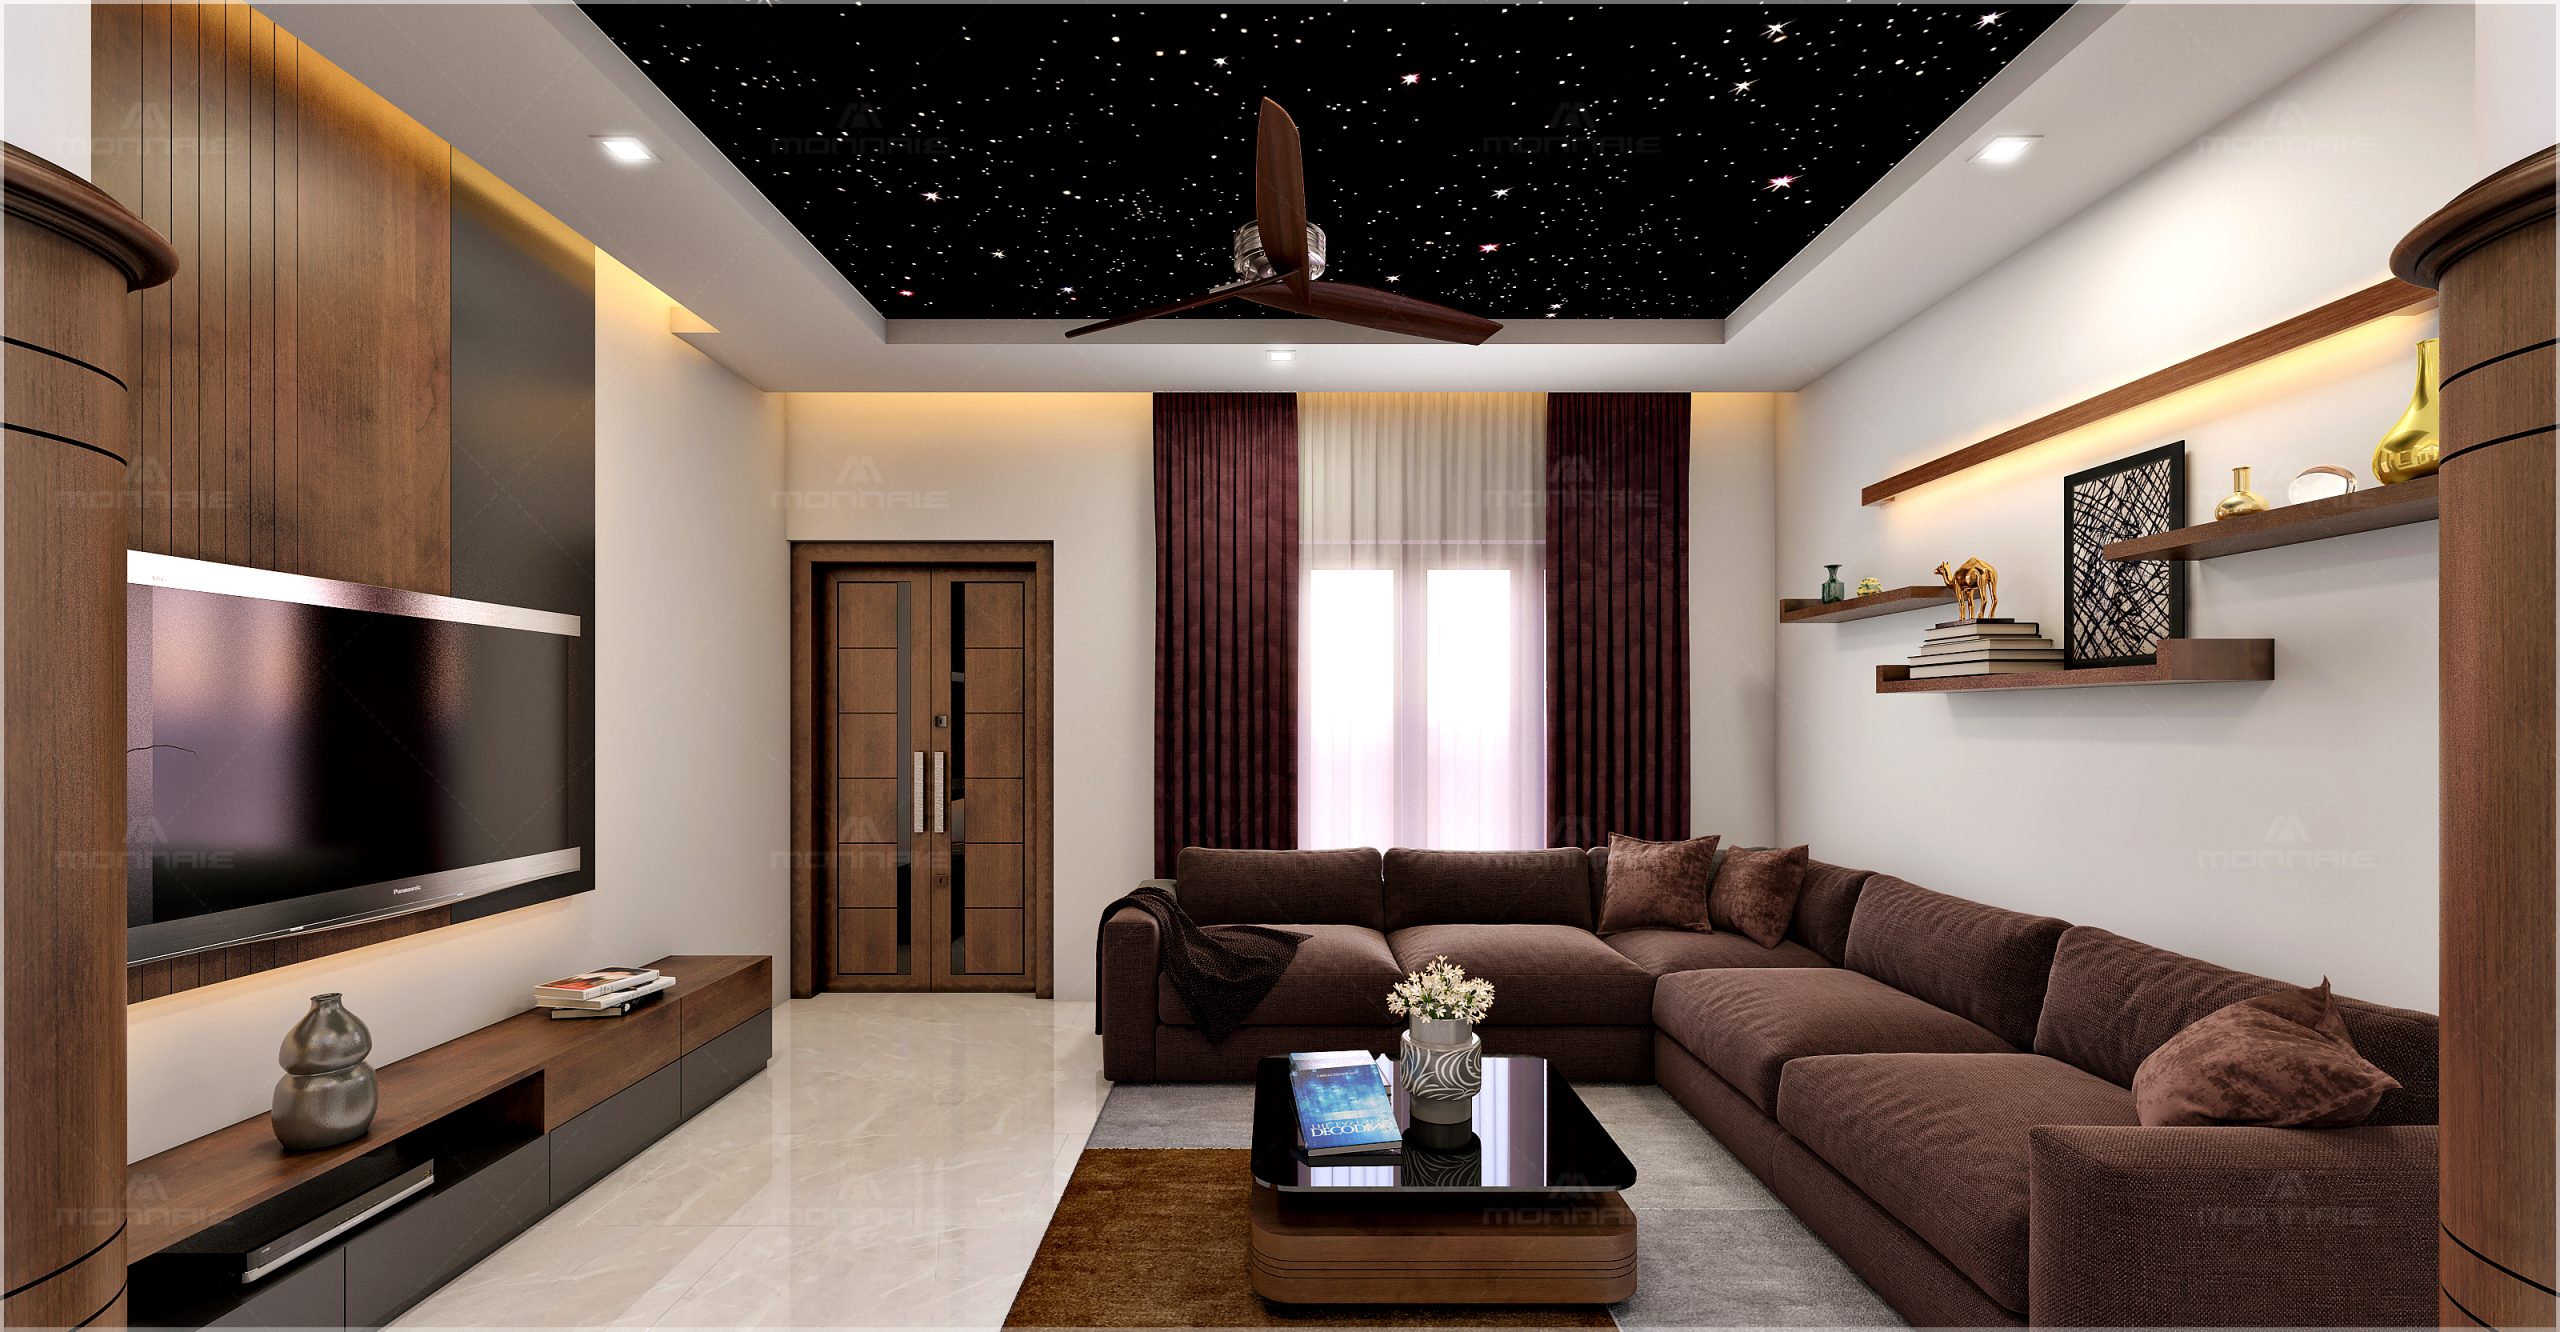 small living room designs in Kerala & bedroom interior designs